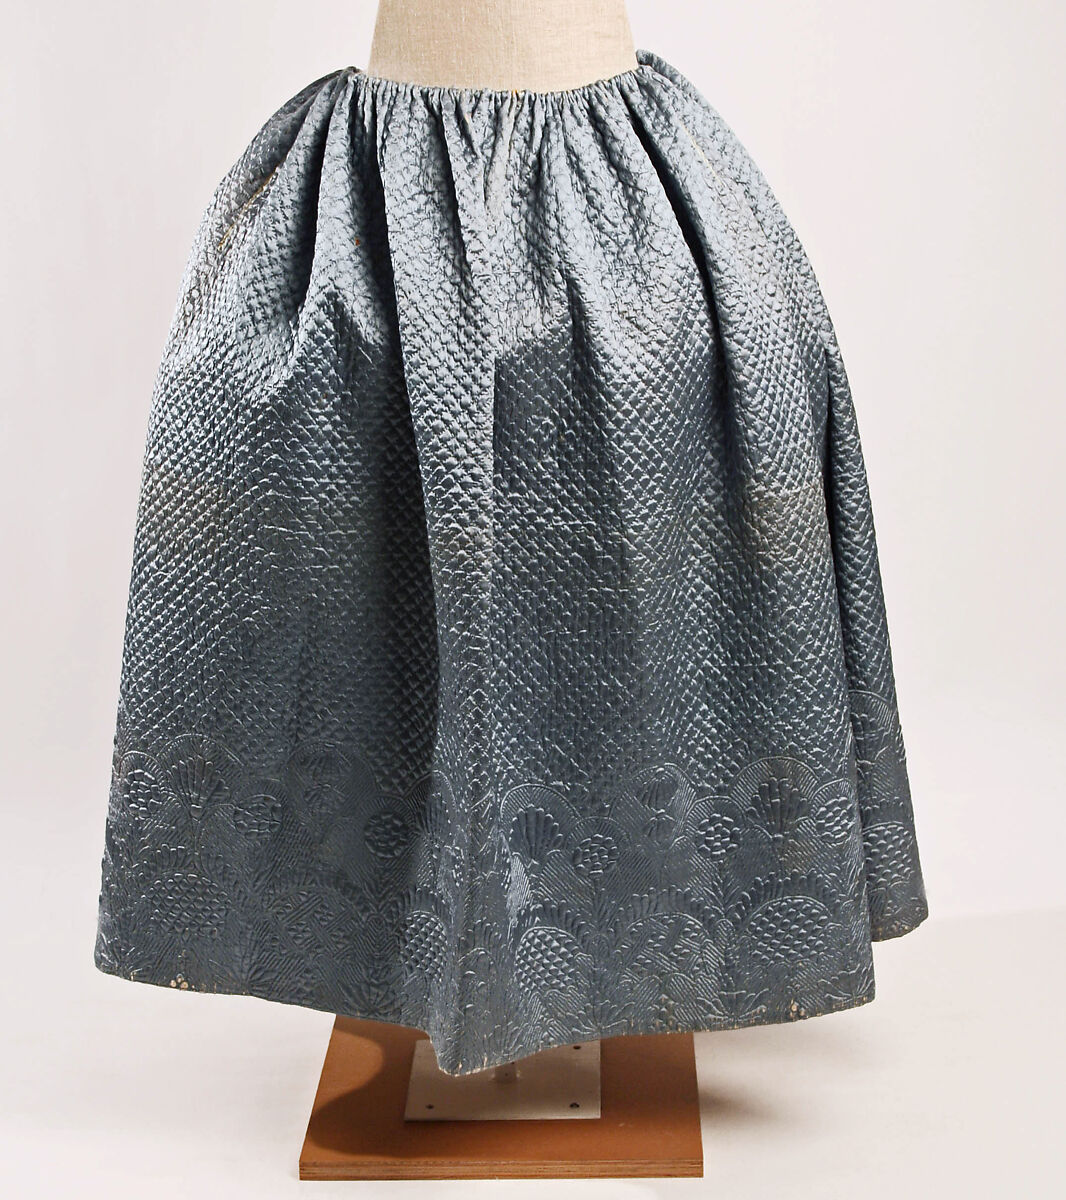 Petticoat, silk, cotton, probably French 